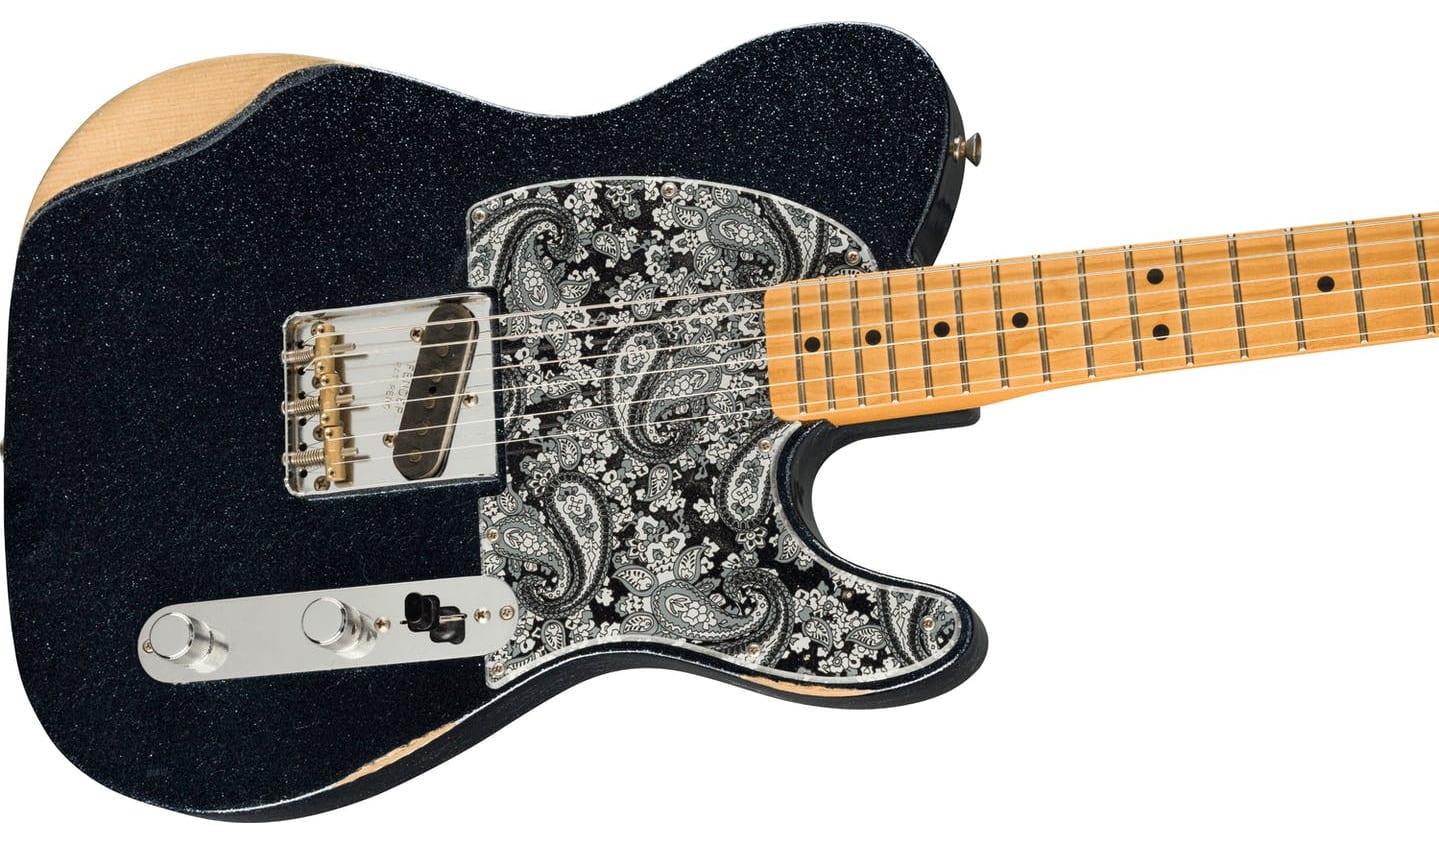 Fender Brad Paisley Esquire with a secret neck pickup